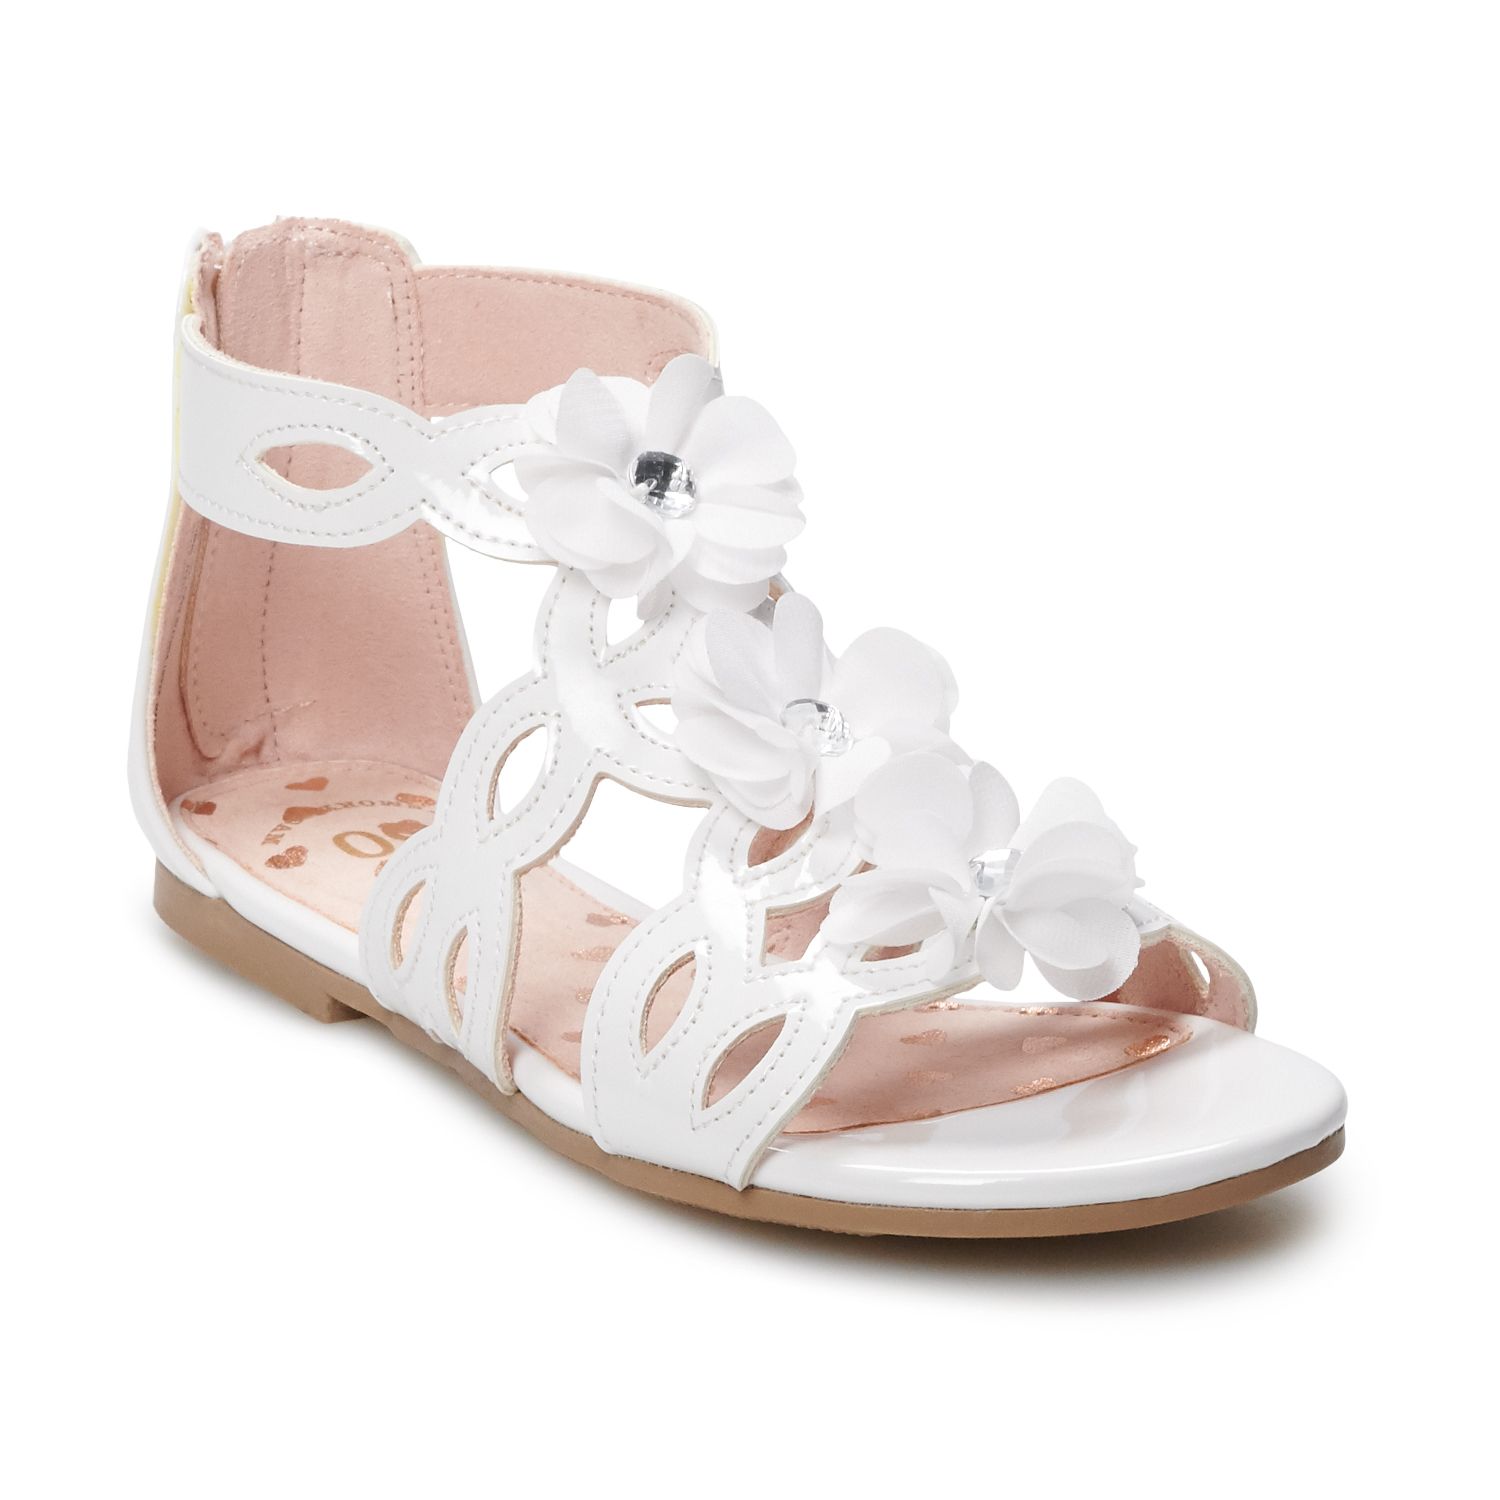 Girls Easter Sandals - Shoes | Kohl's